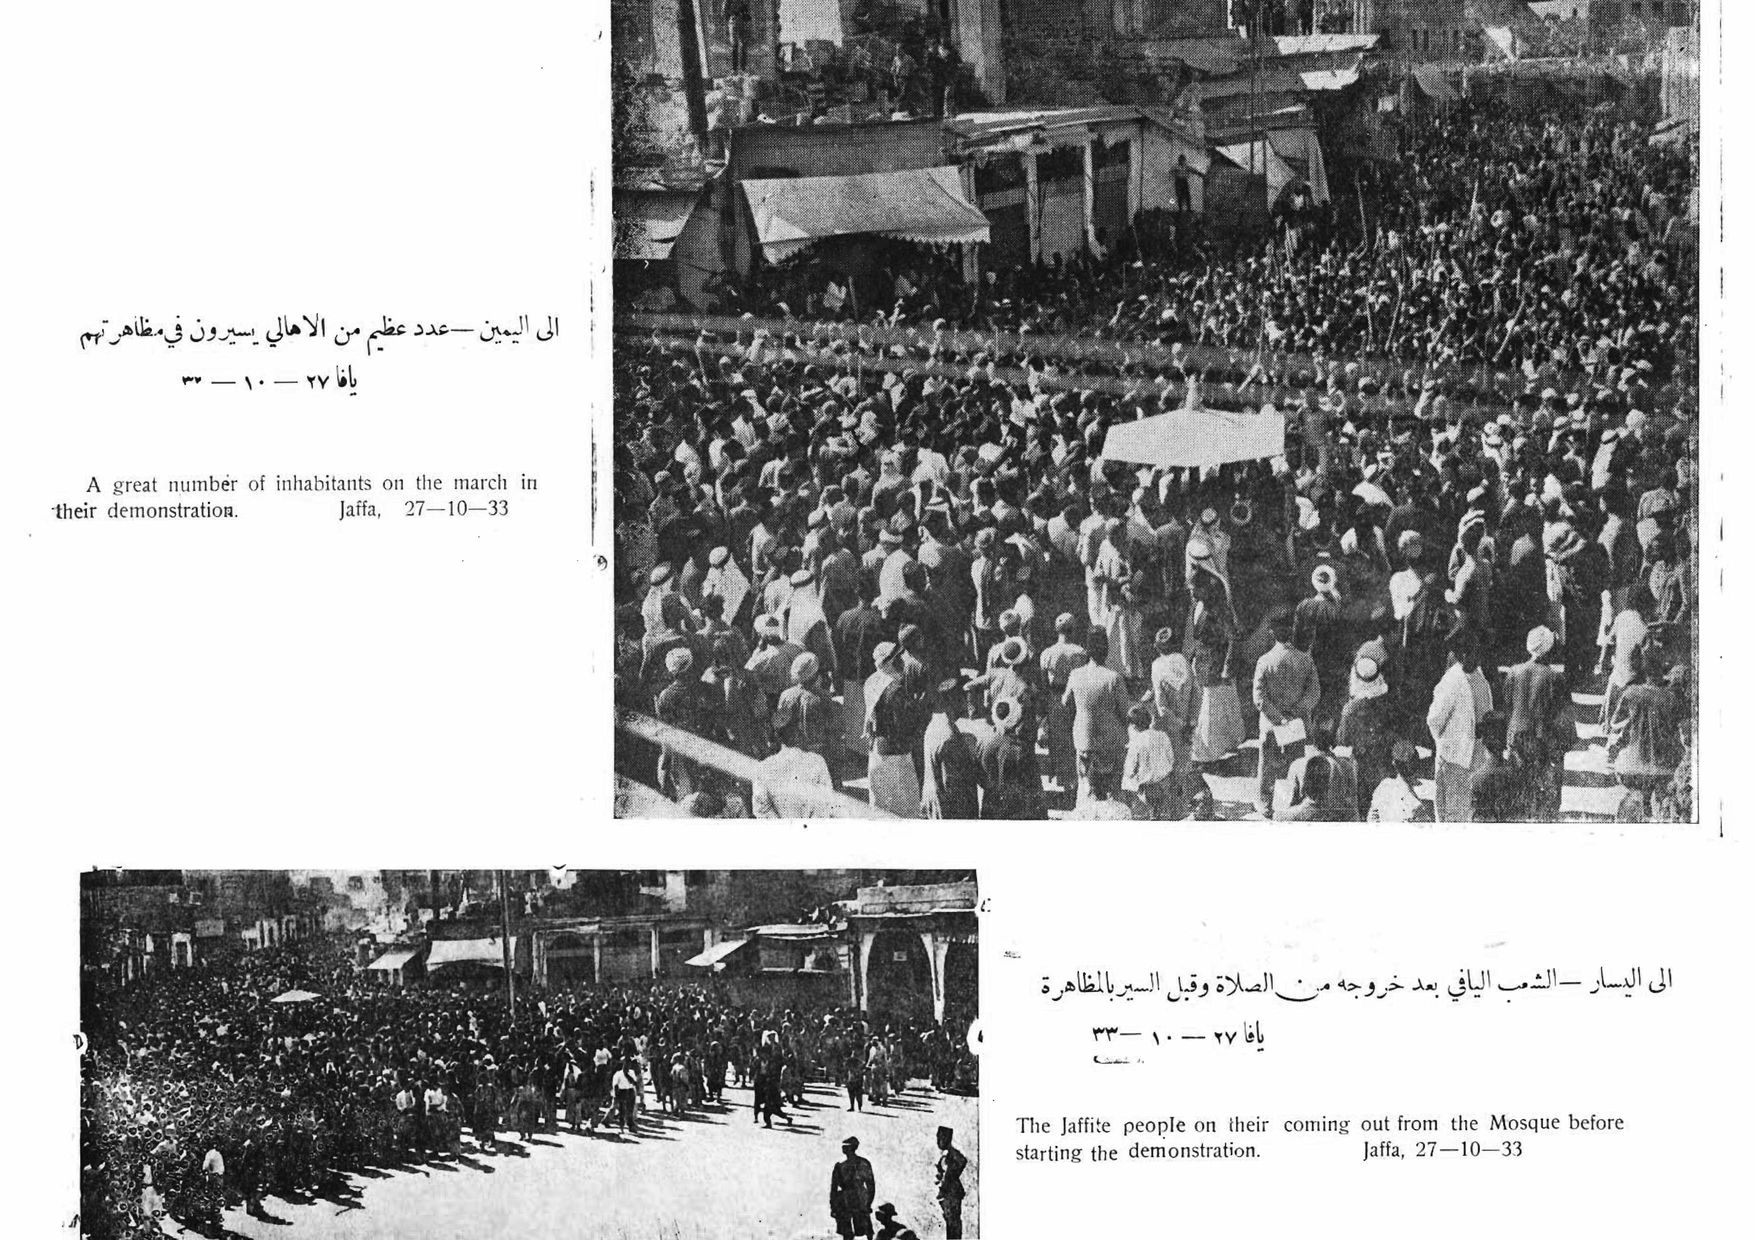 Jaffa Demonstration 1933 عدد عظيم من الأهالي مظاهرة يافا ١٩٣٣
الشعب اليافي الصلاة الجامع jaffite people mosque after prayers